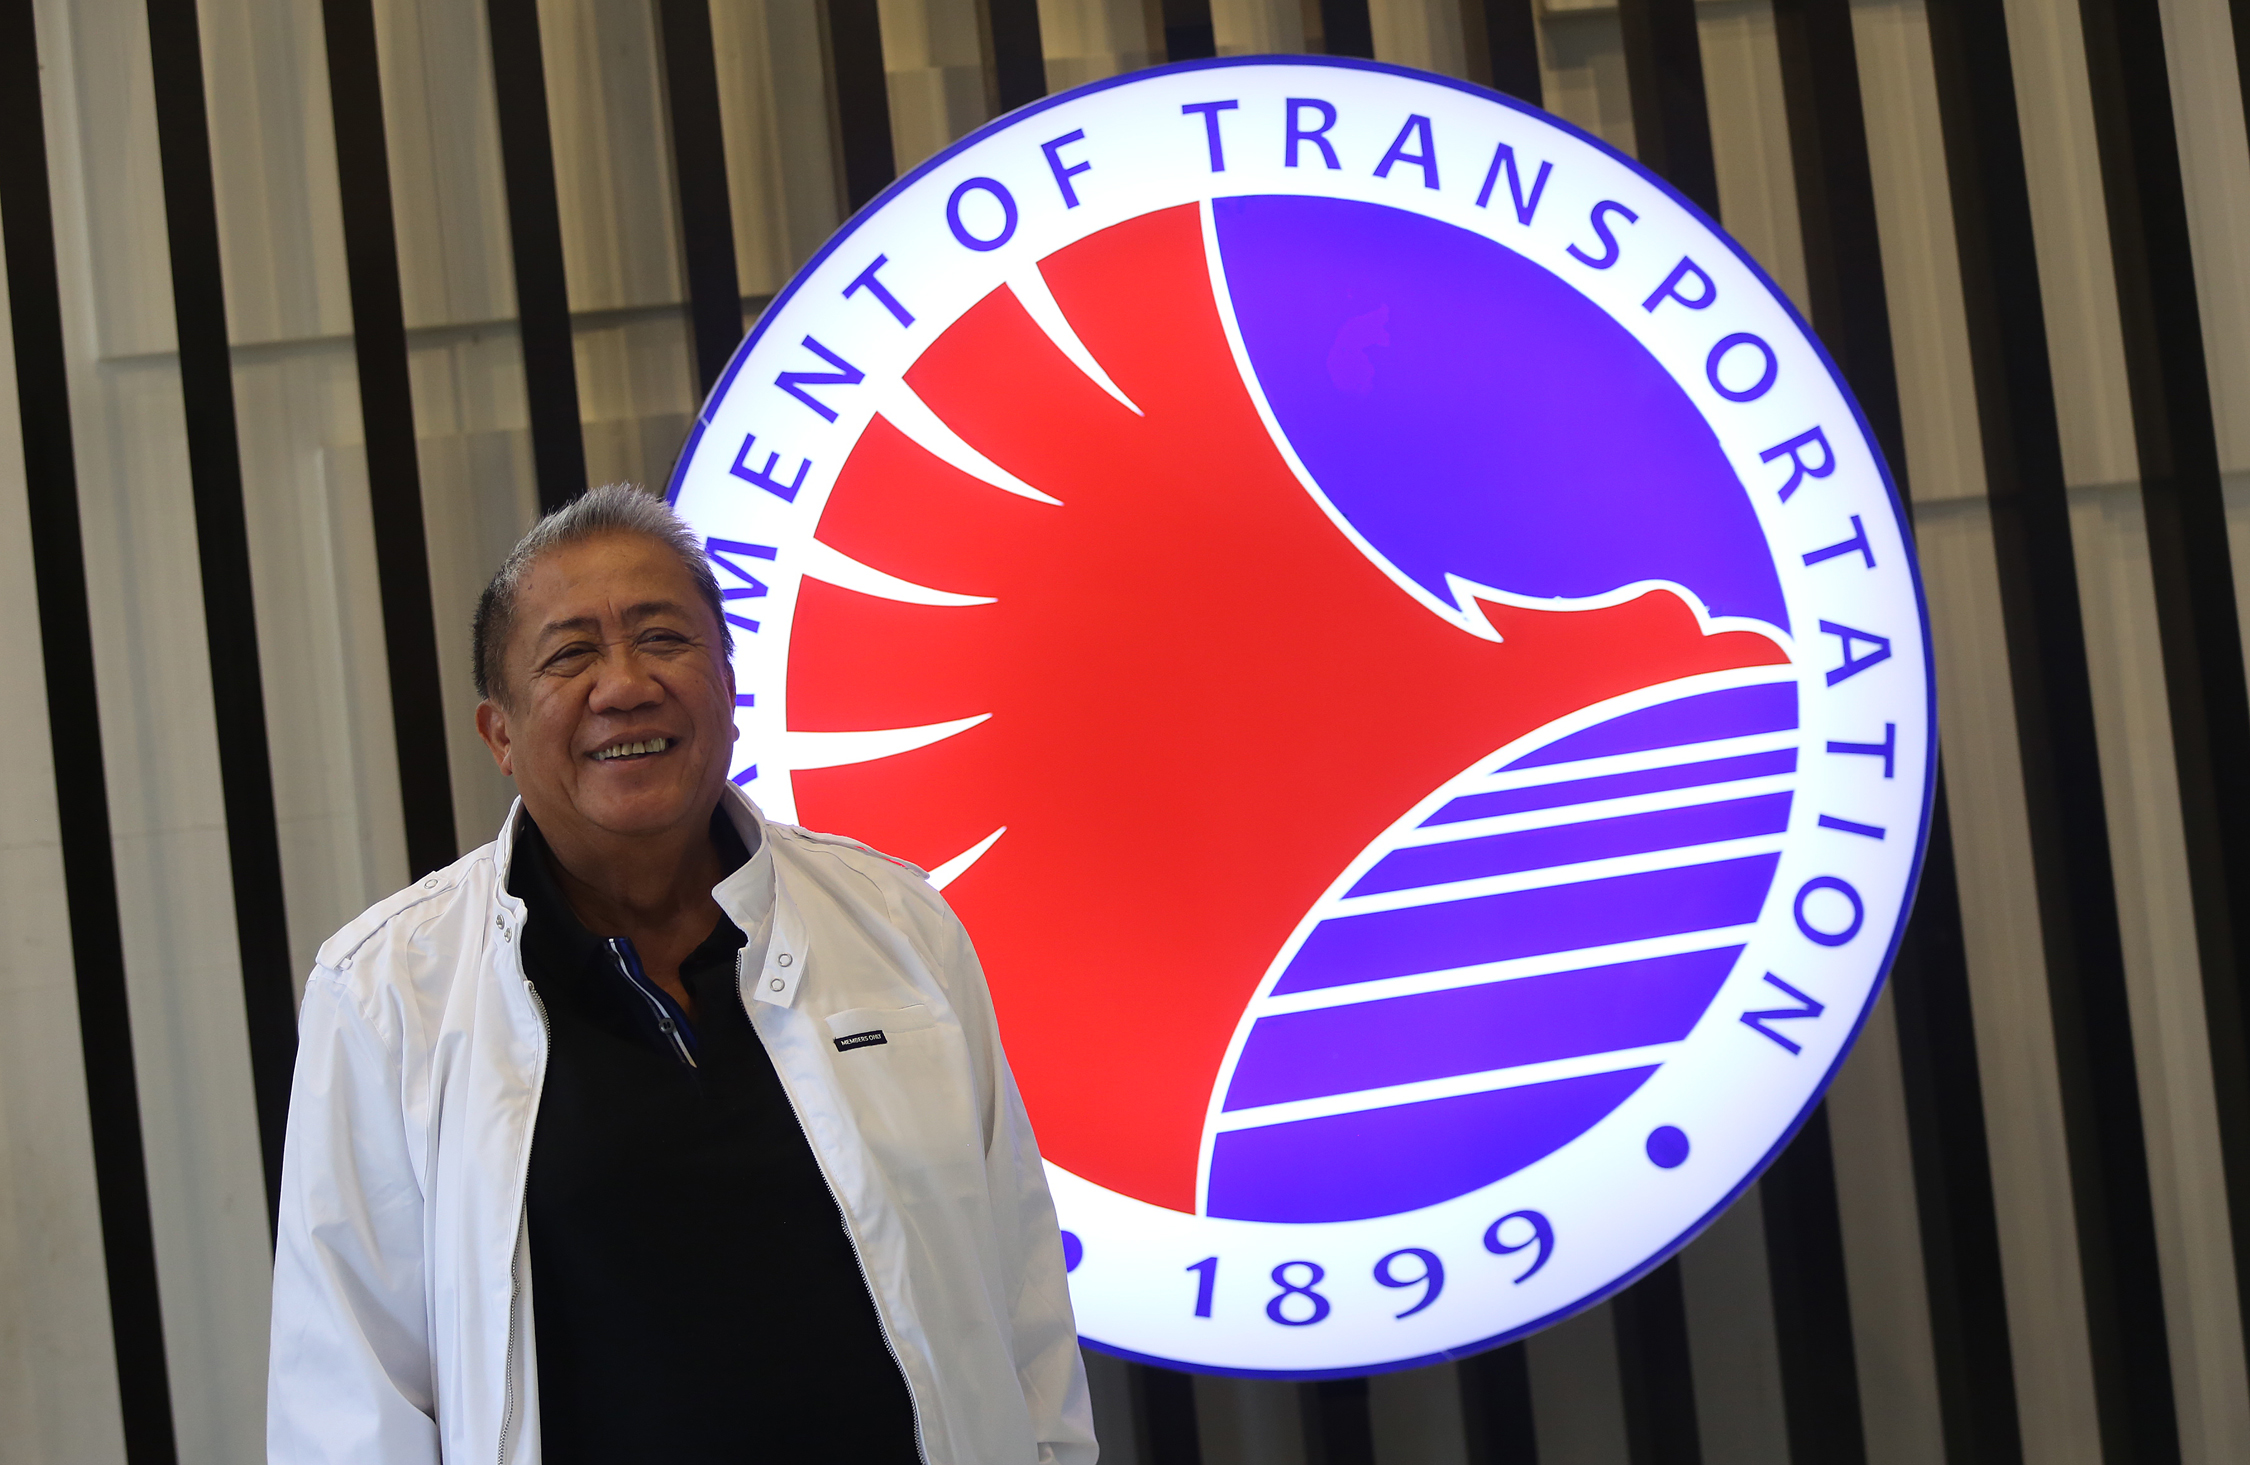 DOTr breaks ground for Metro Manila subway project